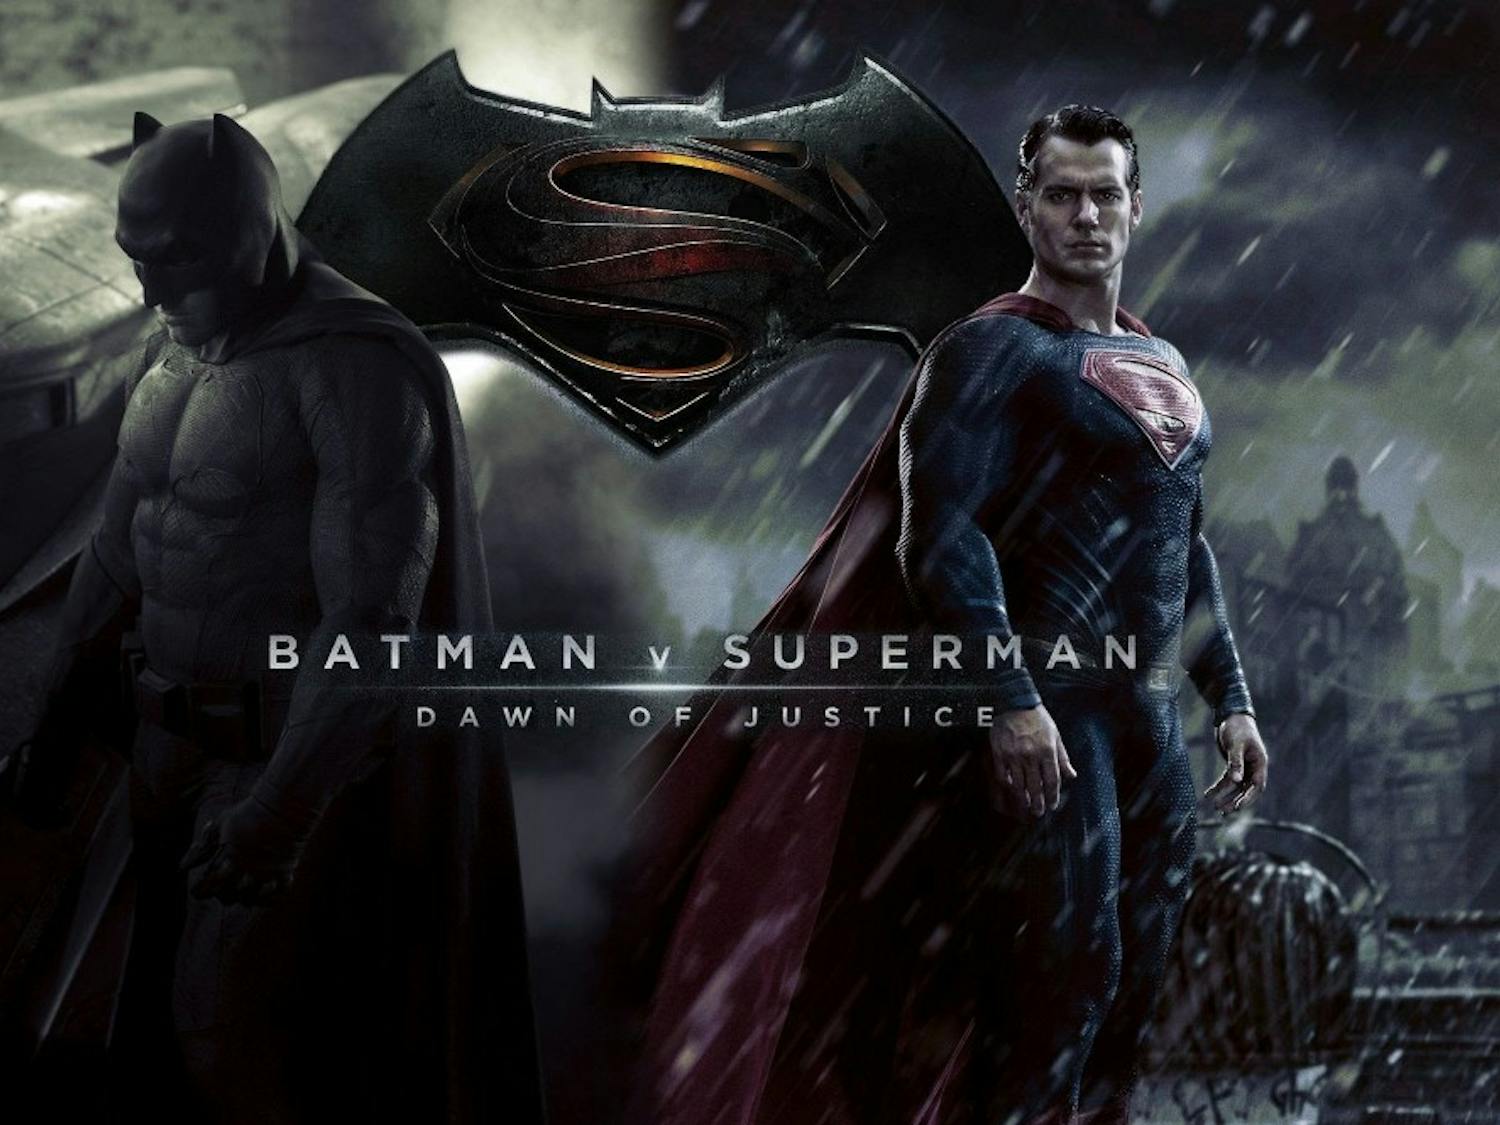 Zack Snyder's&nbsp;'Batman v Superman' fails to deliver with its plotline.&nbsp;